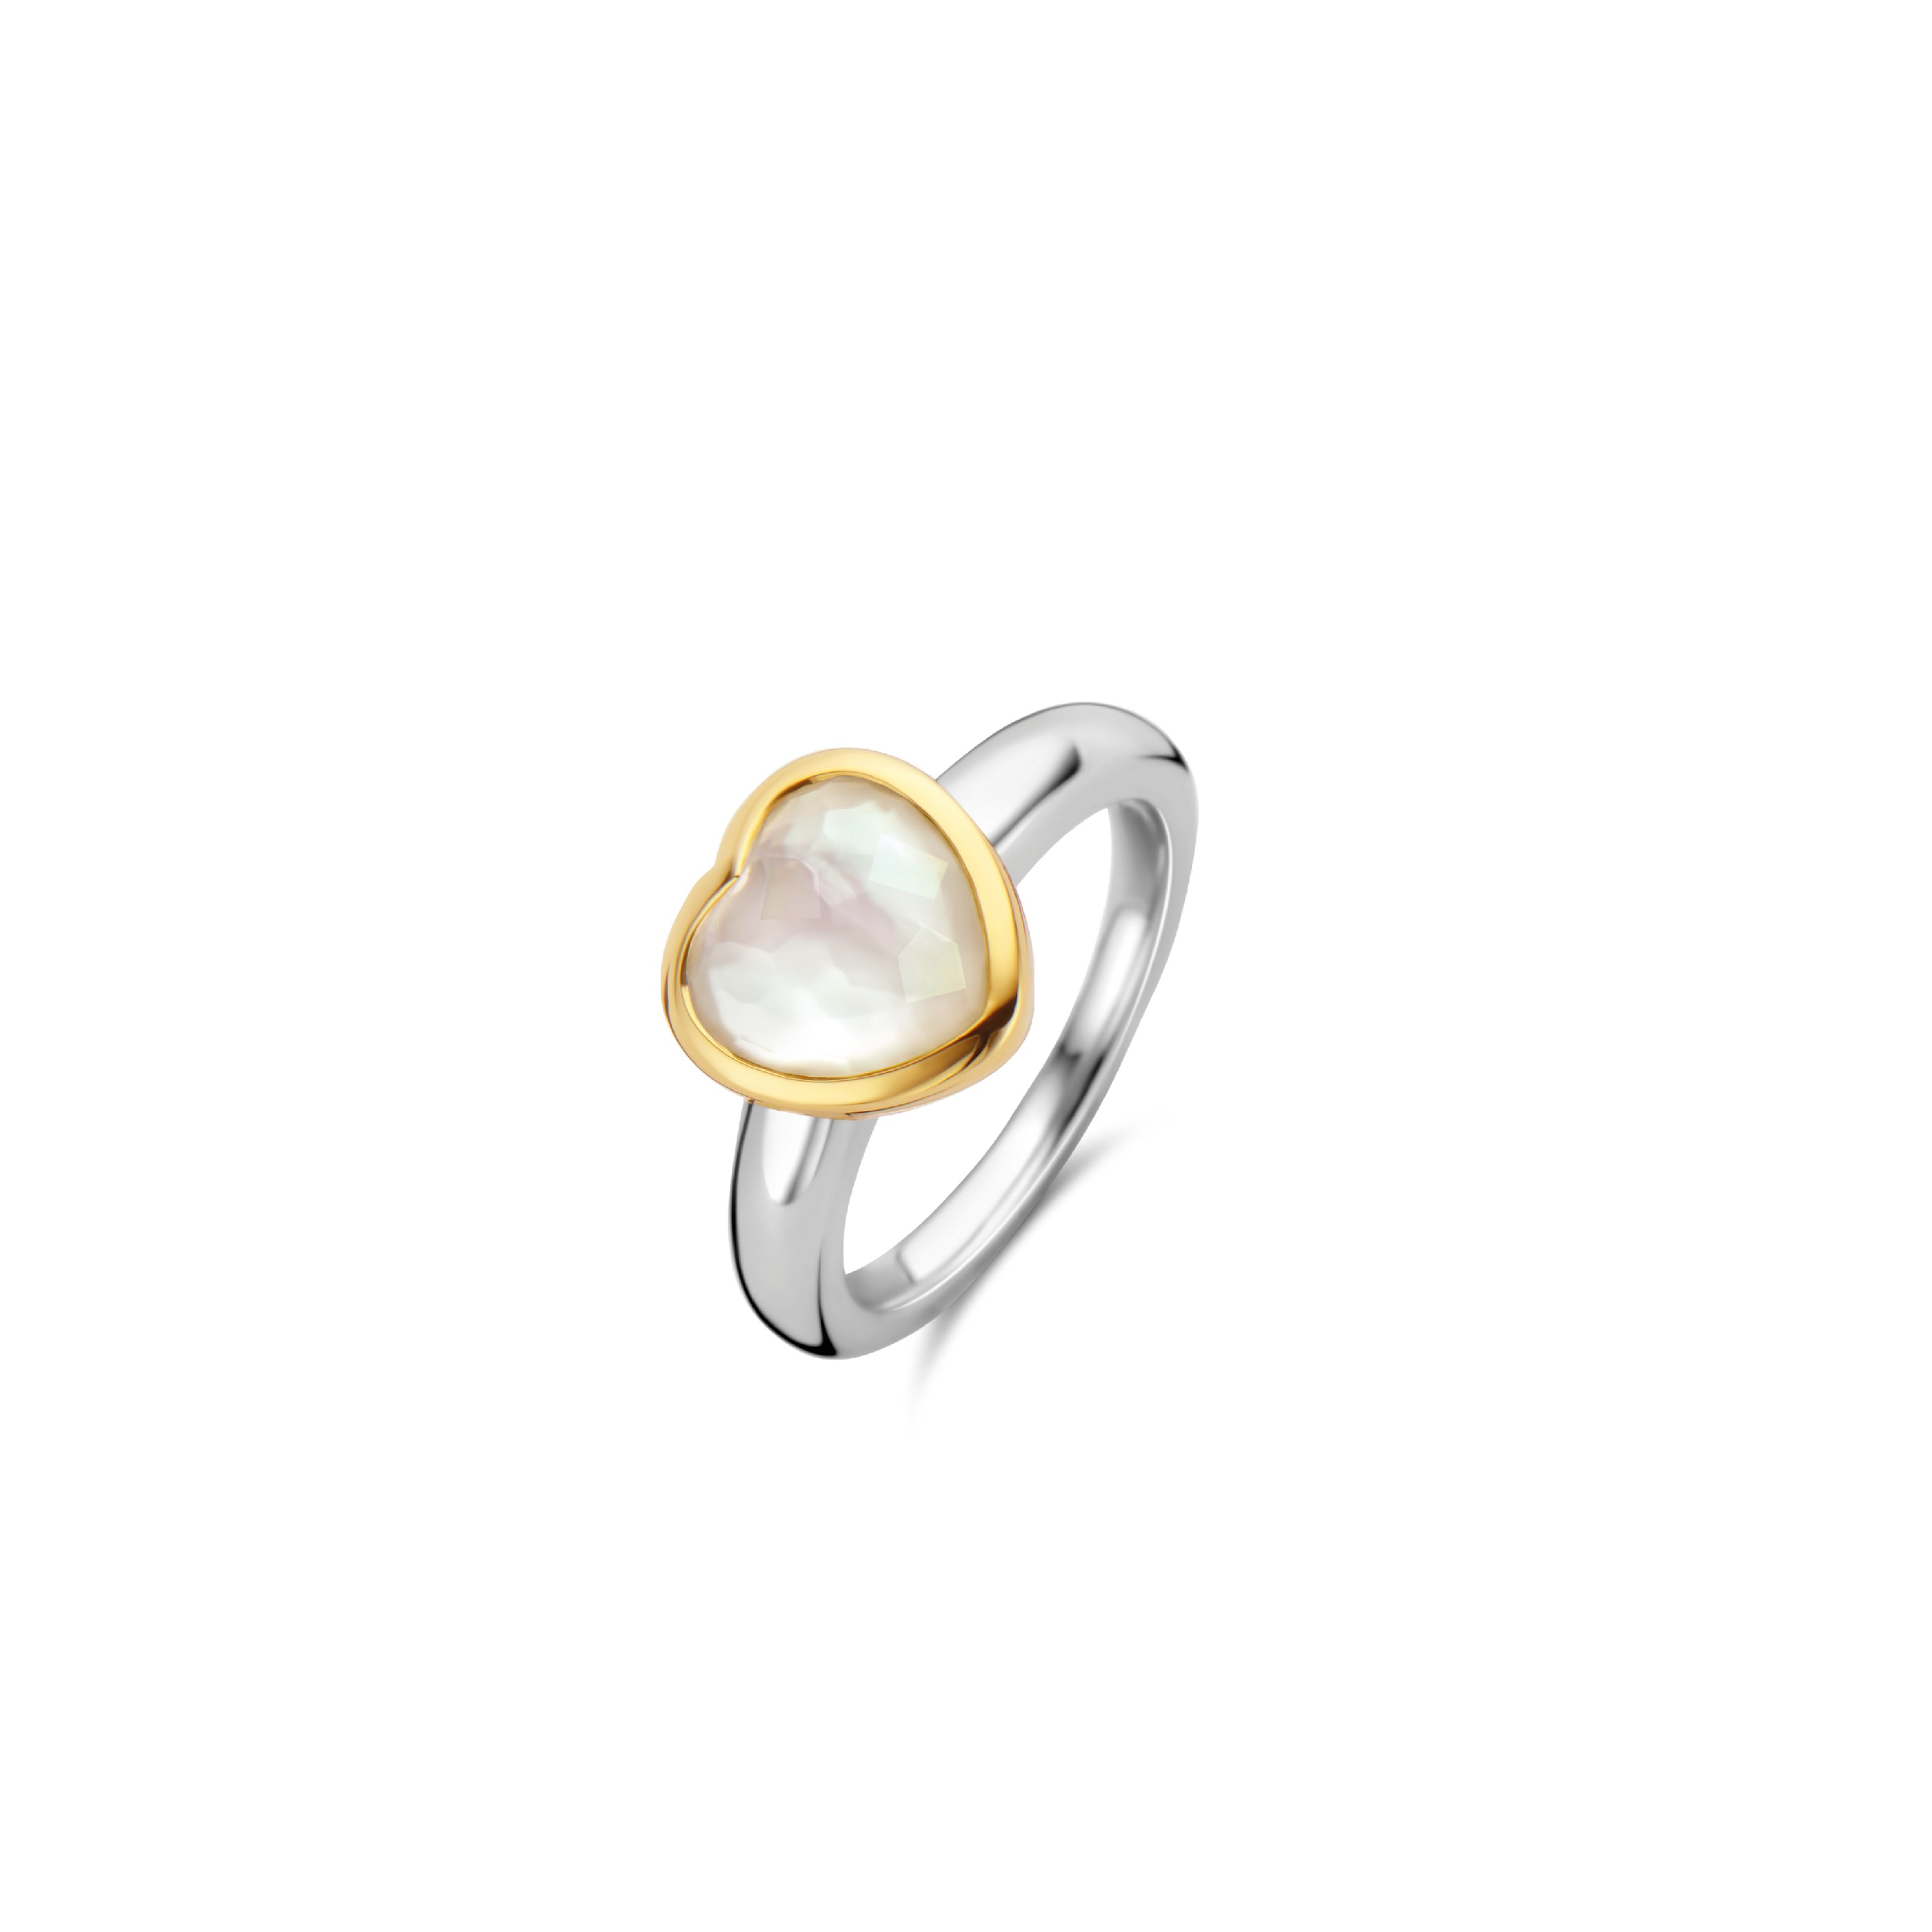 TI SENTO - Milano Ring 12219MW Gala Jewelers Inc. White Oak, PA